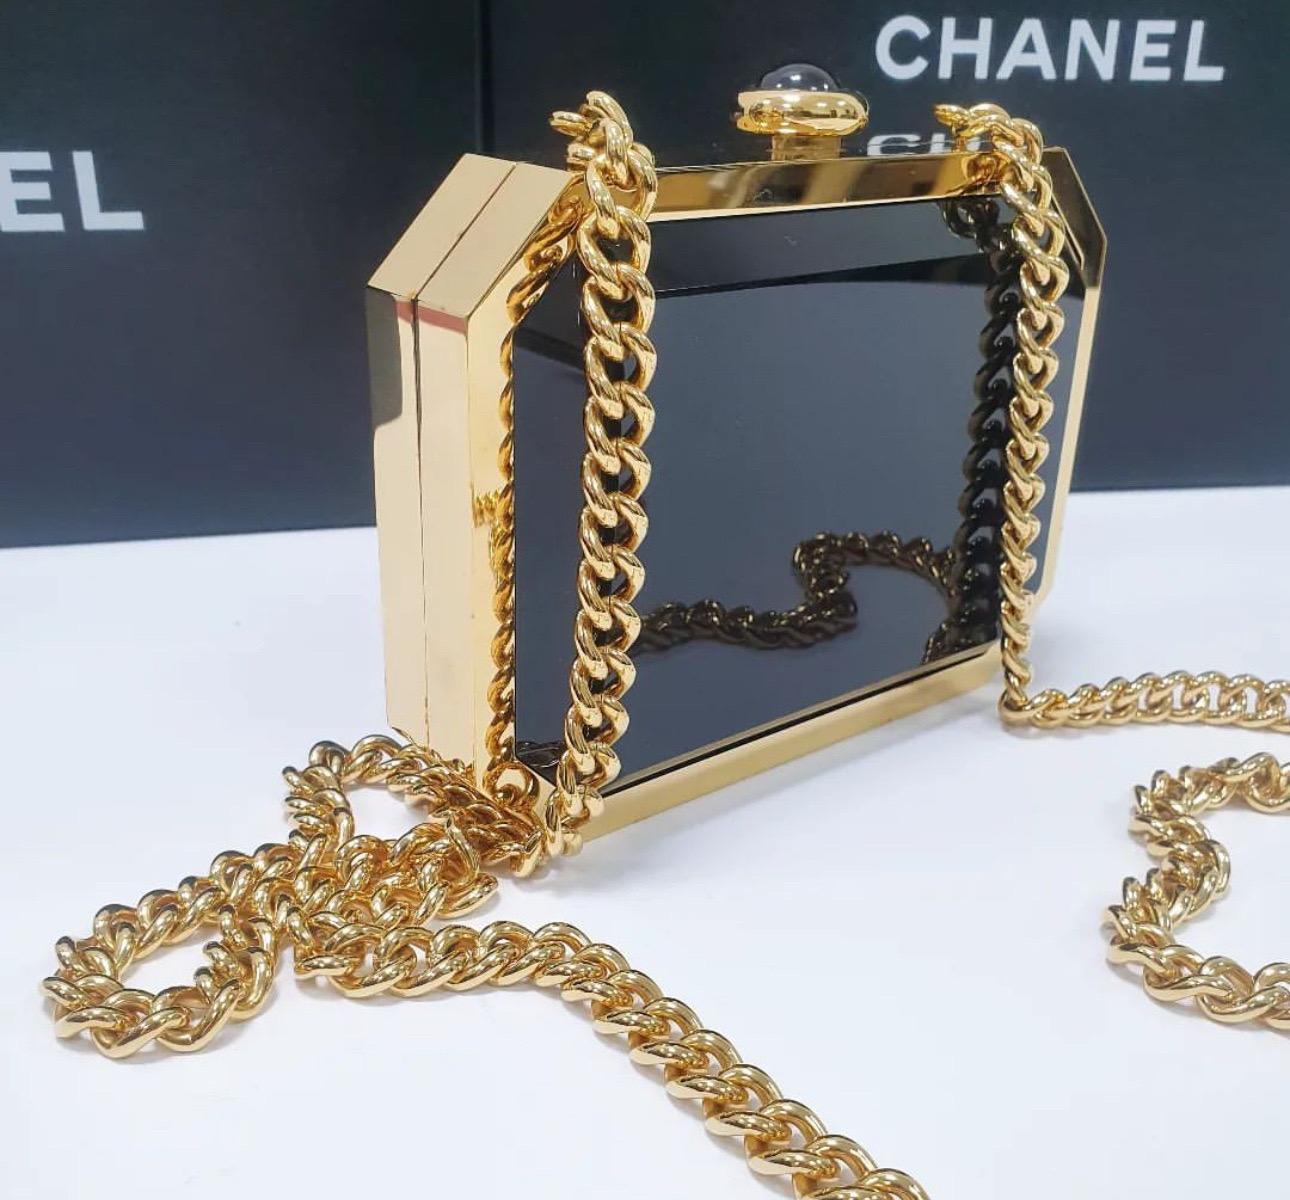 Chanel Premiere Watch Minaudiere Plexiglass Clutch Bag 1